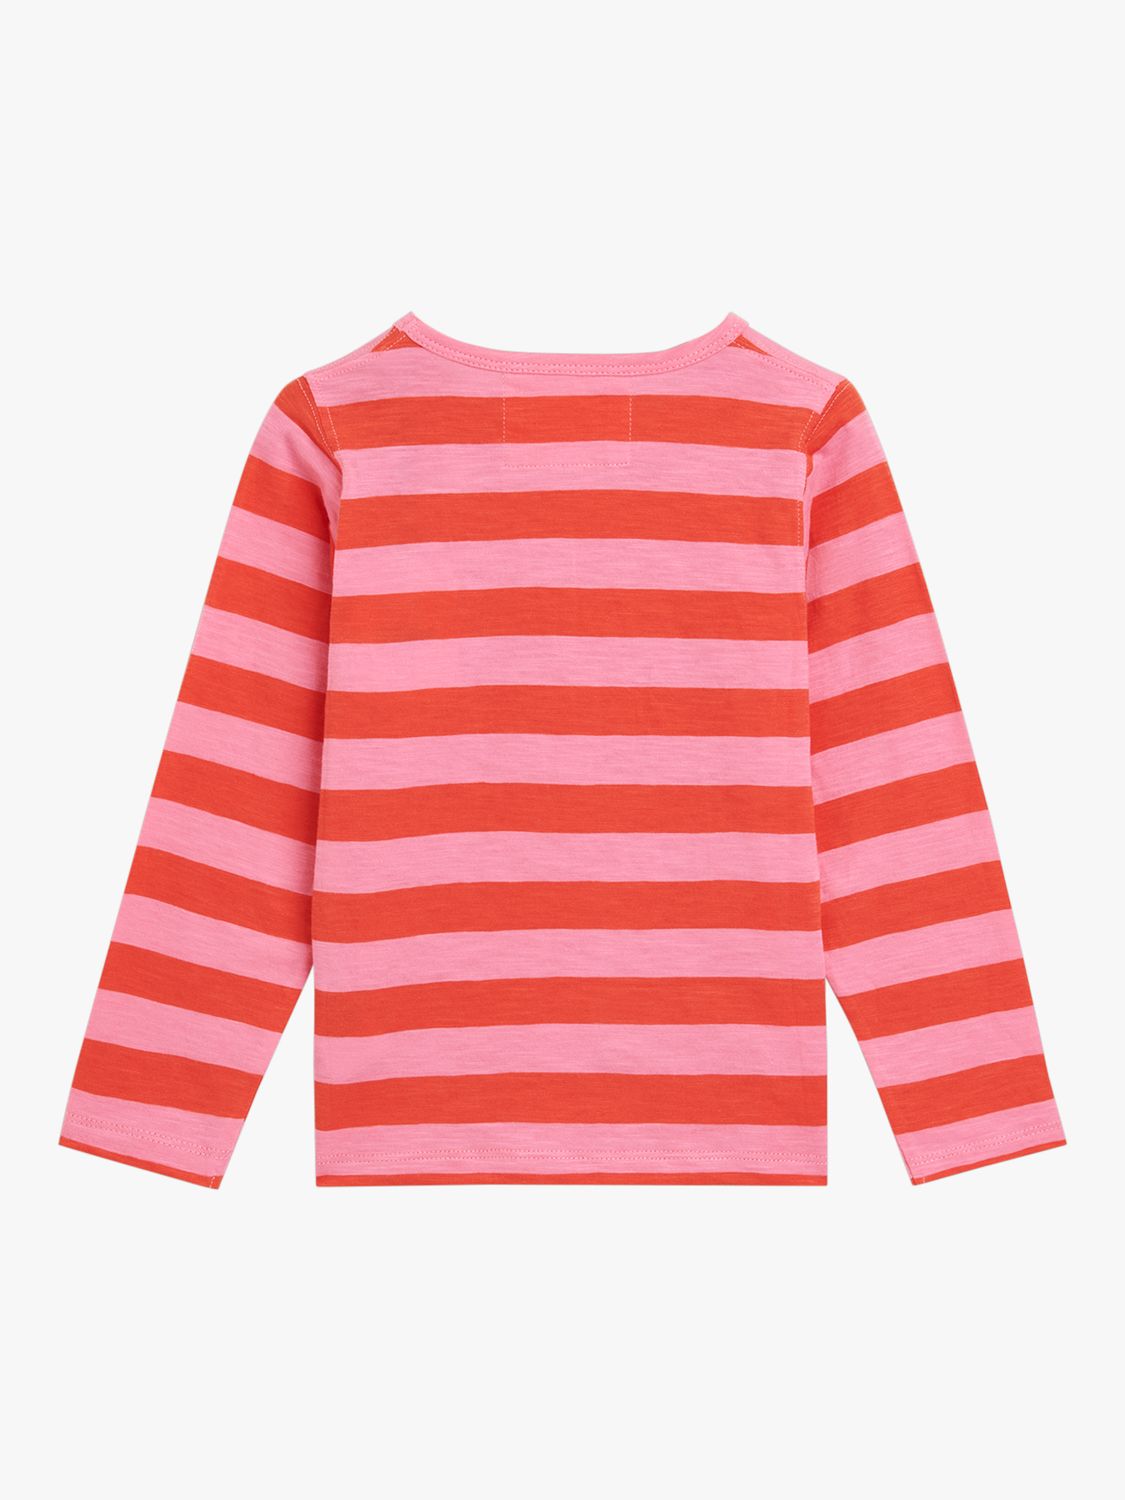 Whistles Kids' Cotton Stripe Long Sleeve Top, Pink, 3-4 years